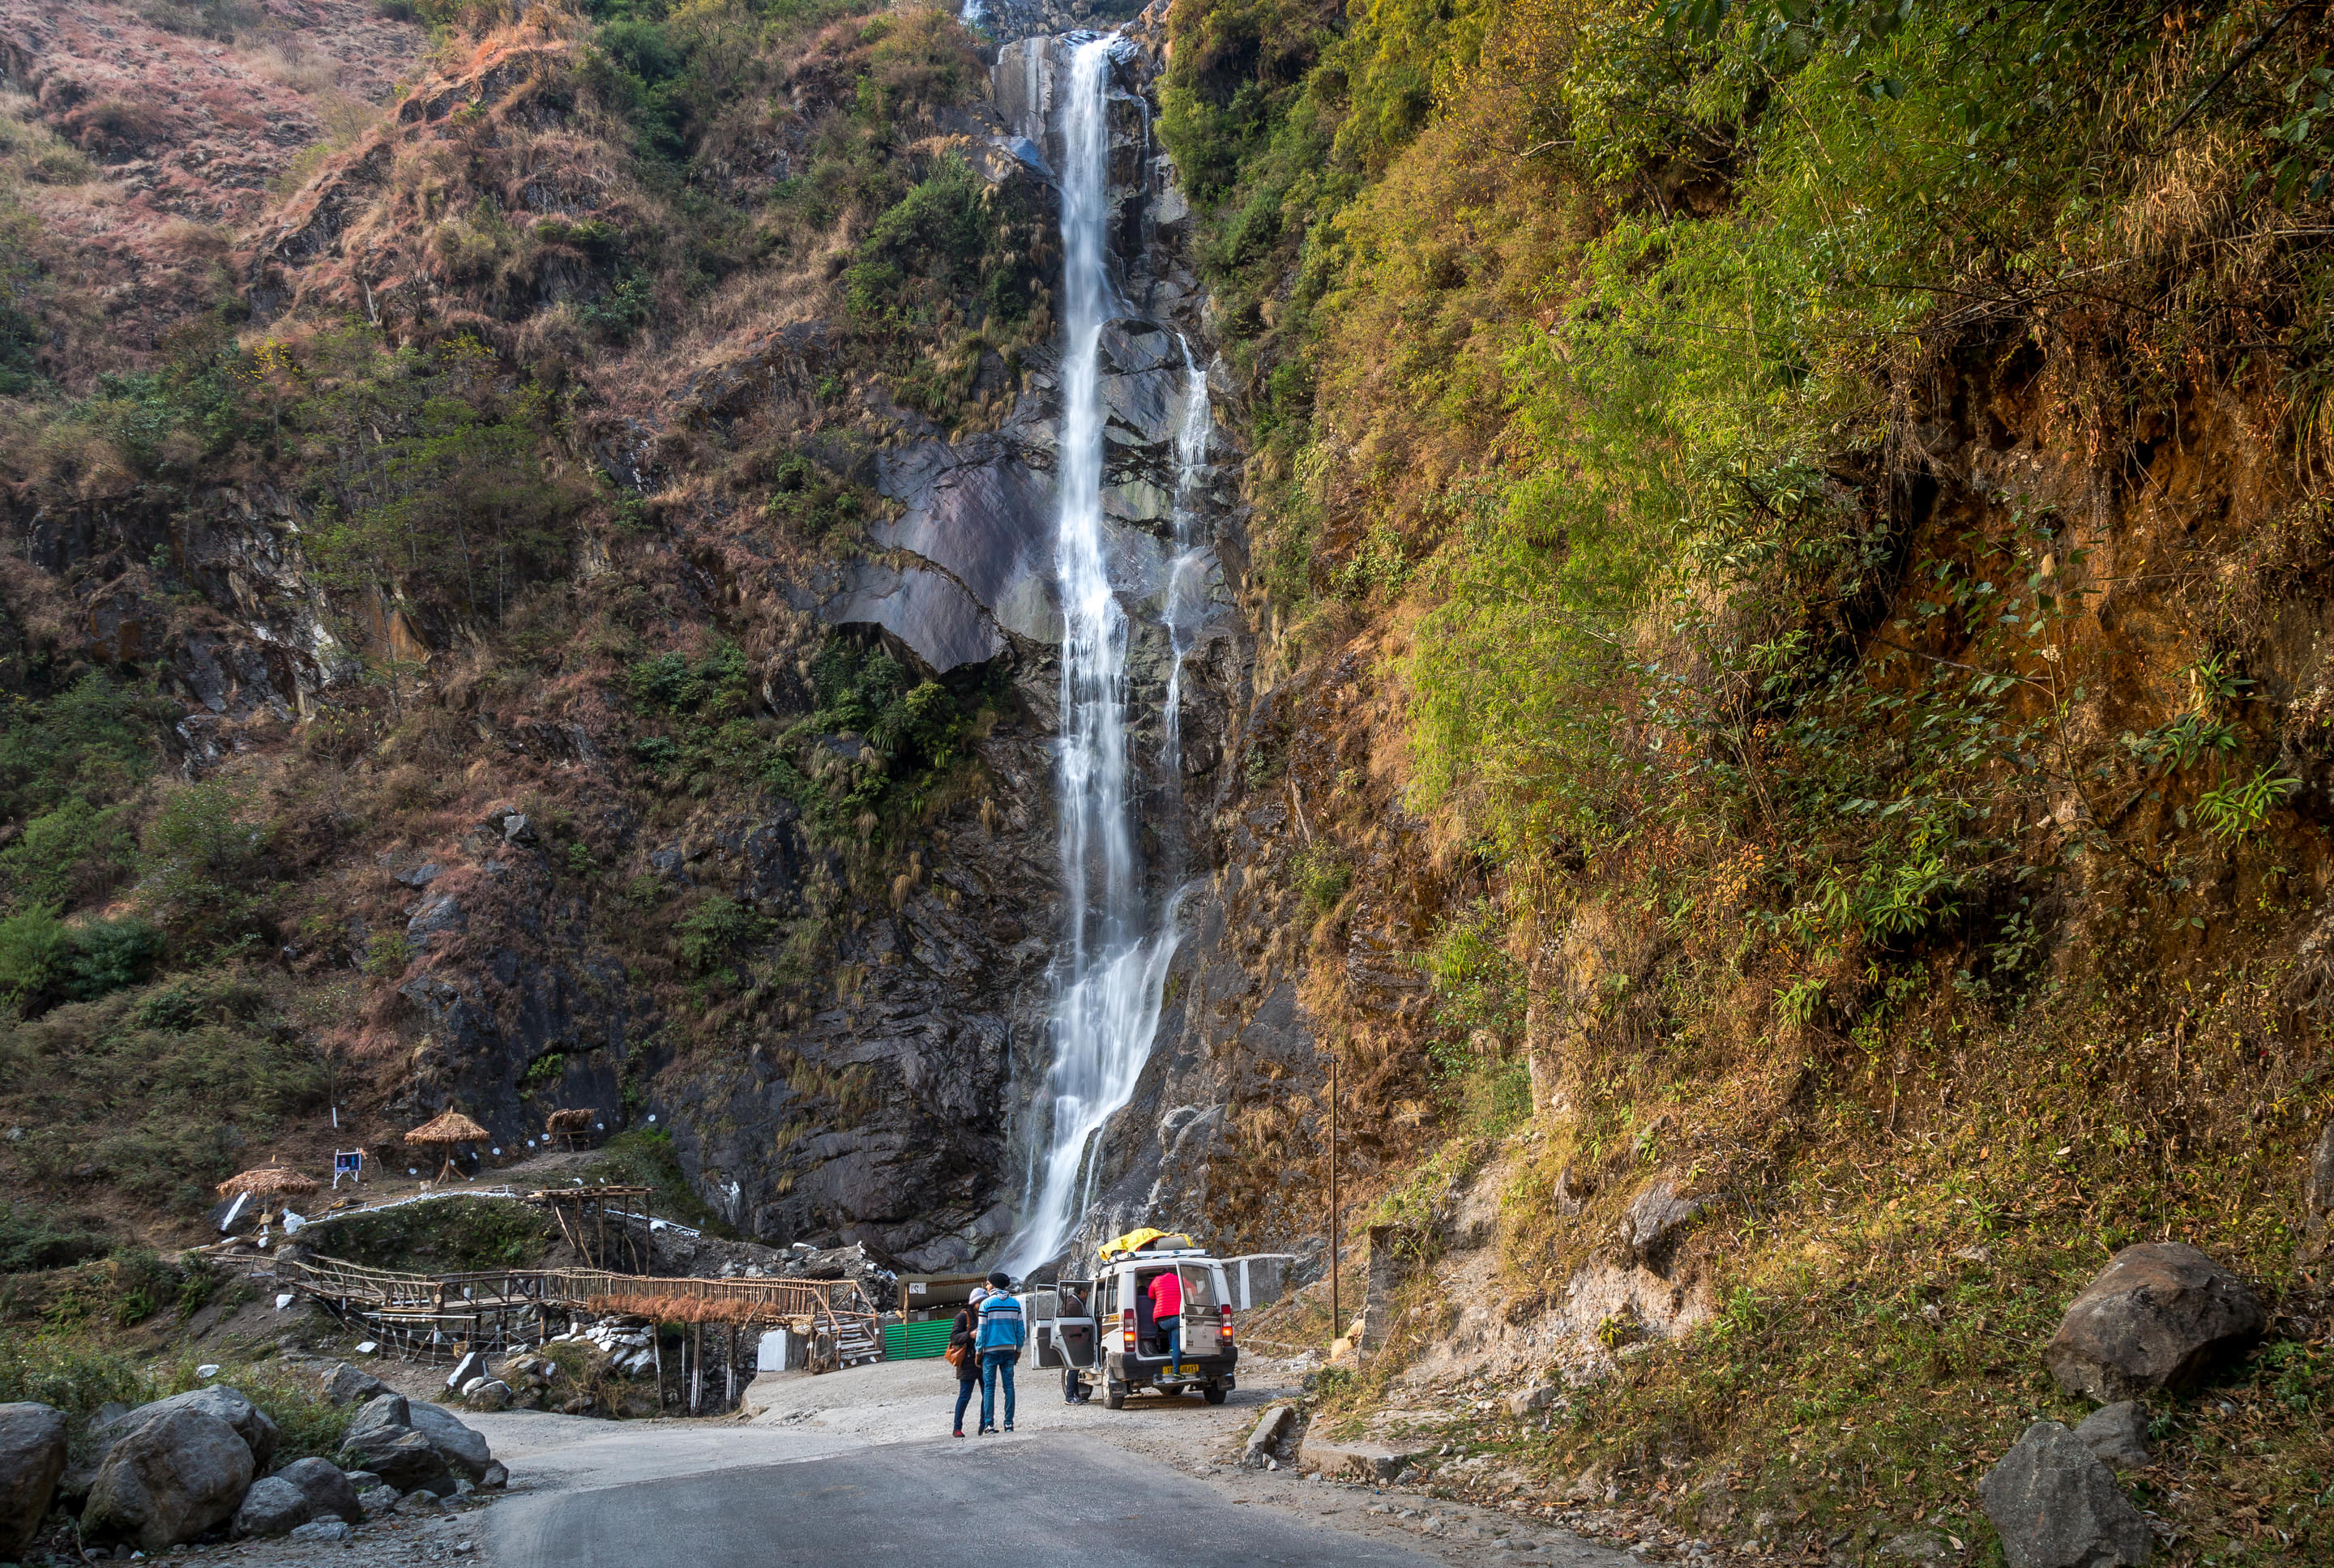 Bhim Nala Falls Overview